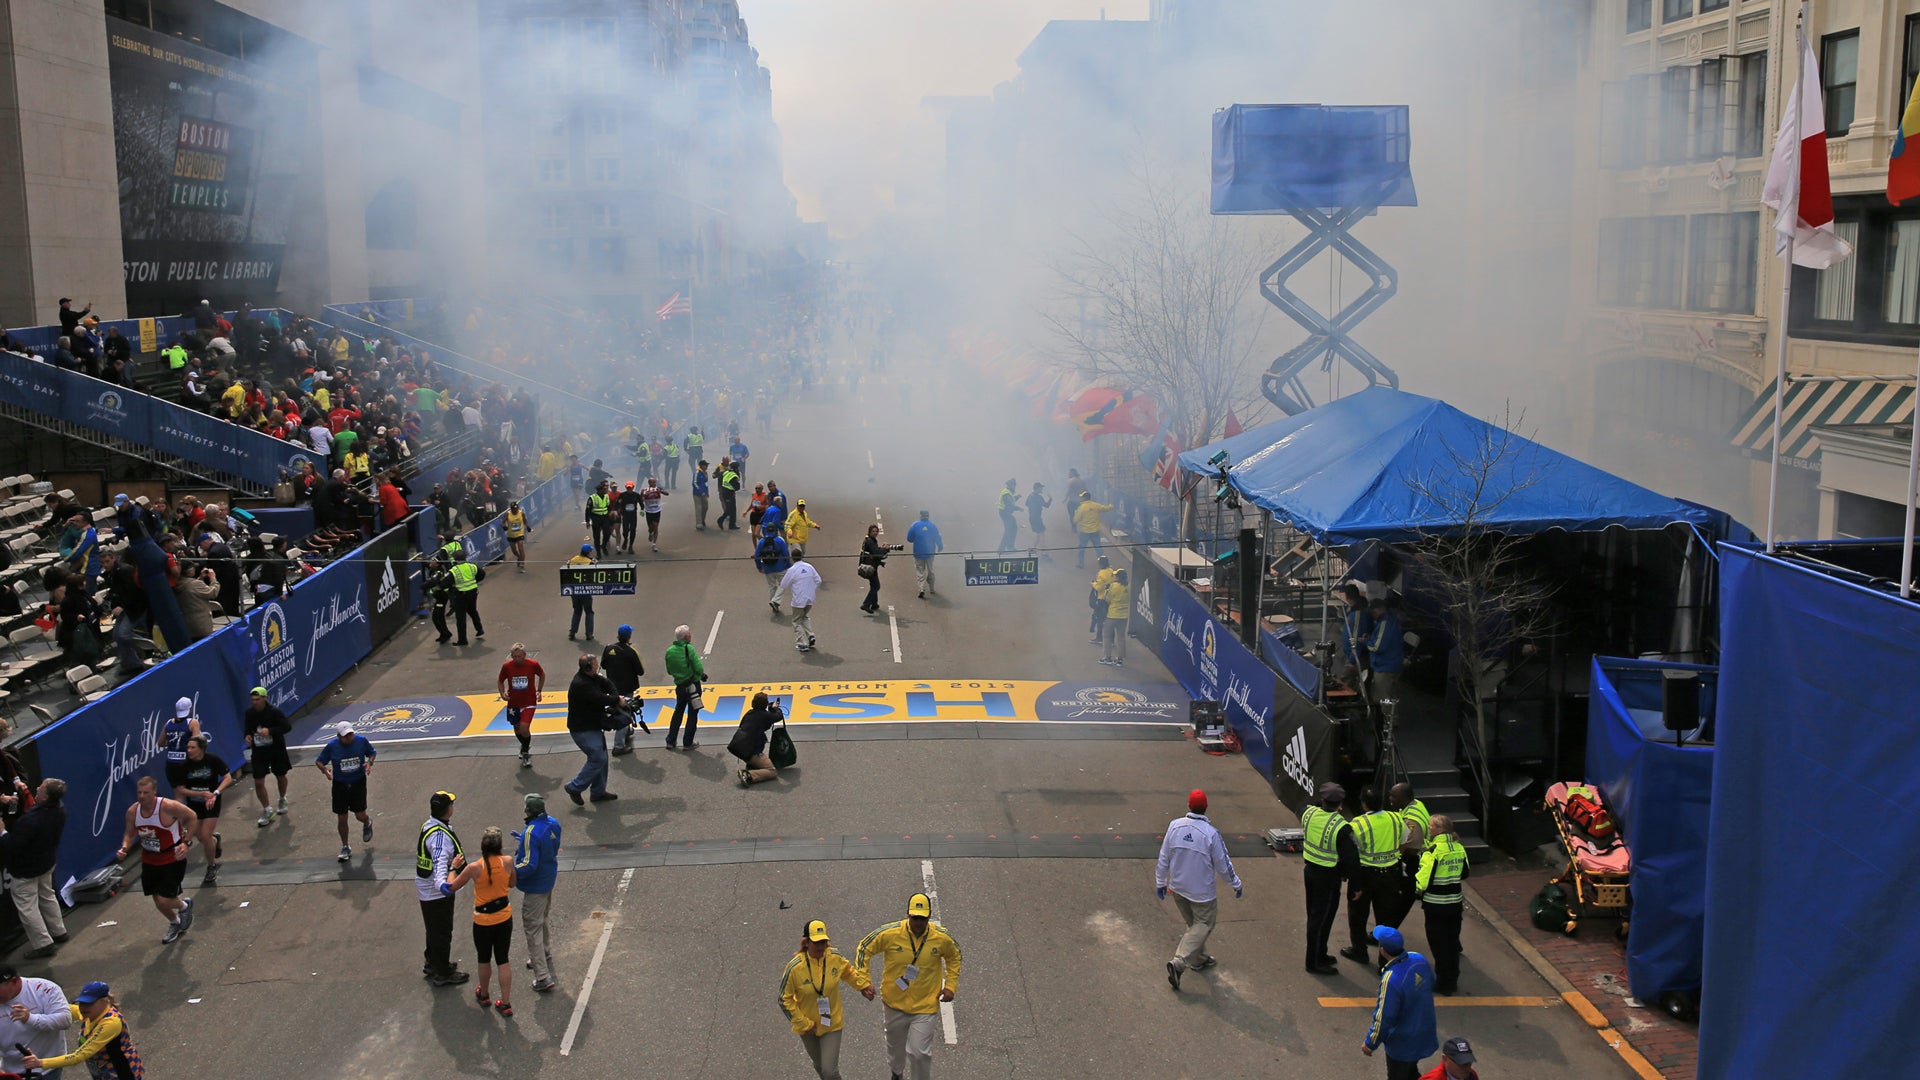 When Did The Boston Marathon Bombing Happen